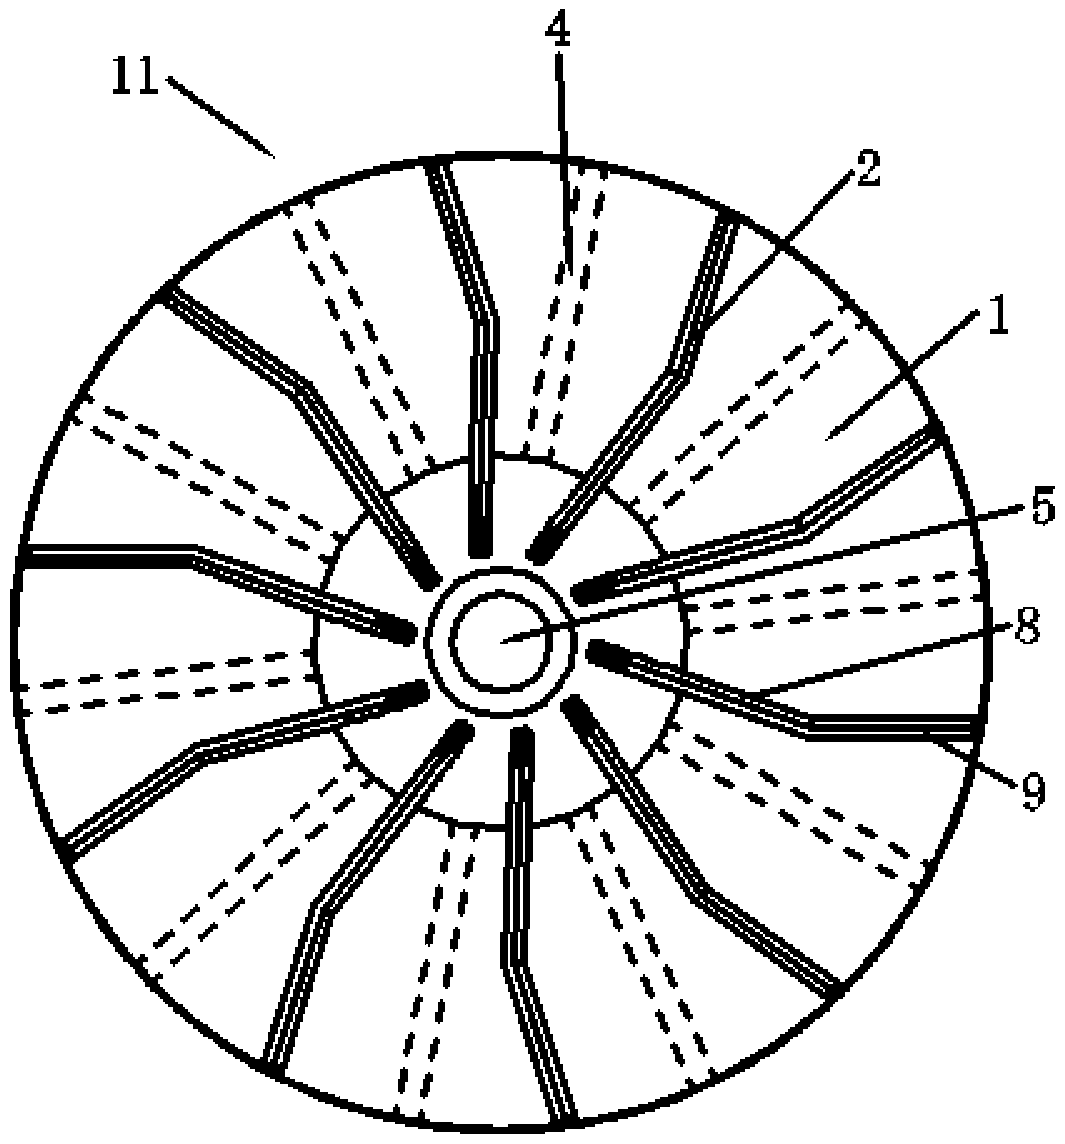 Elastomer internal flow circling structure constant pressure centrifugal pump